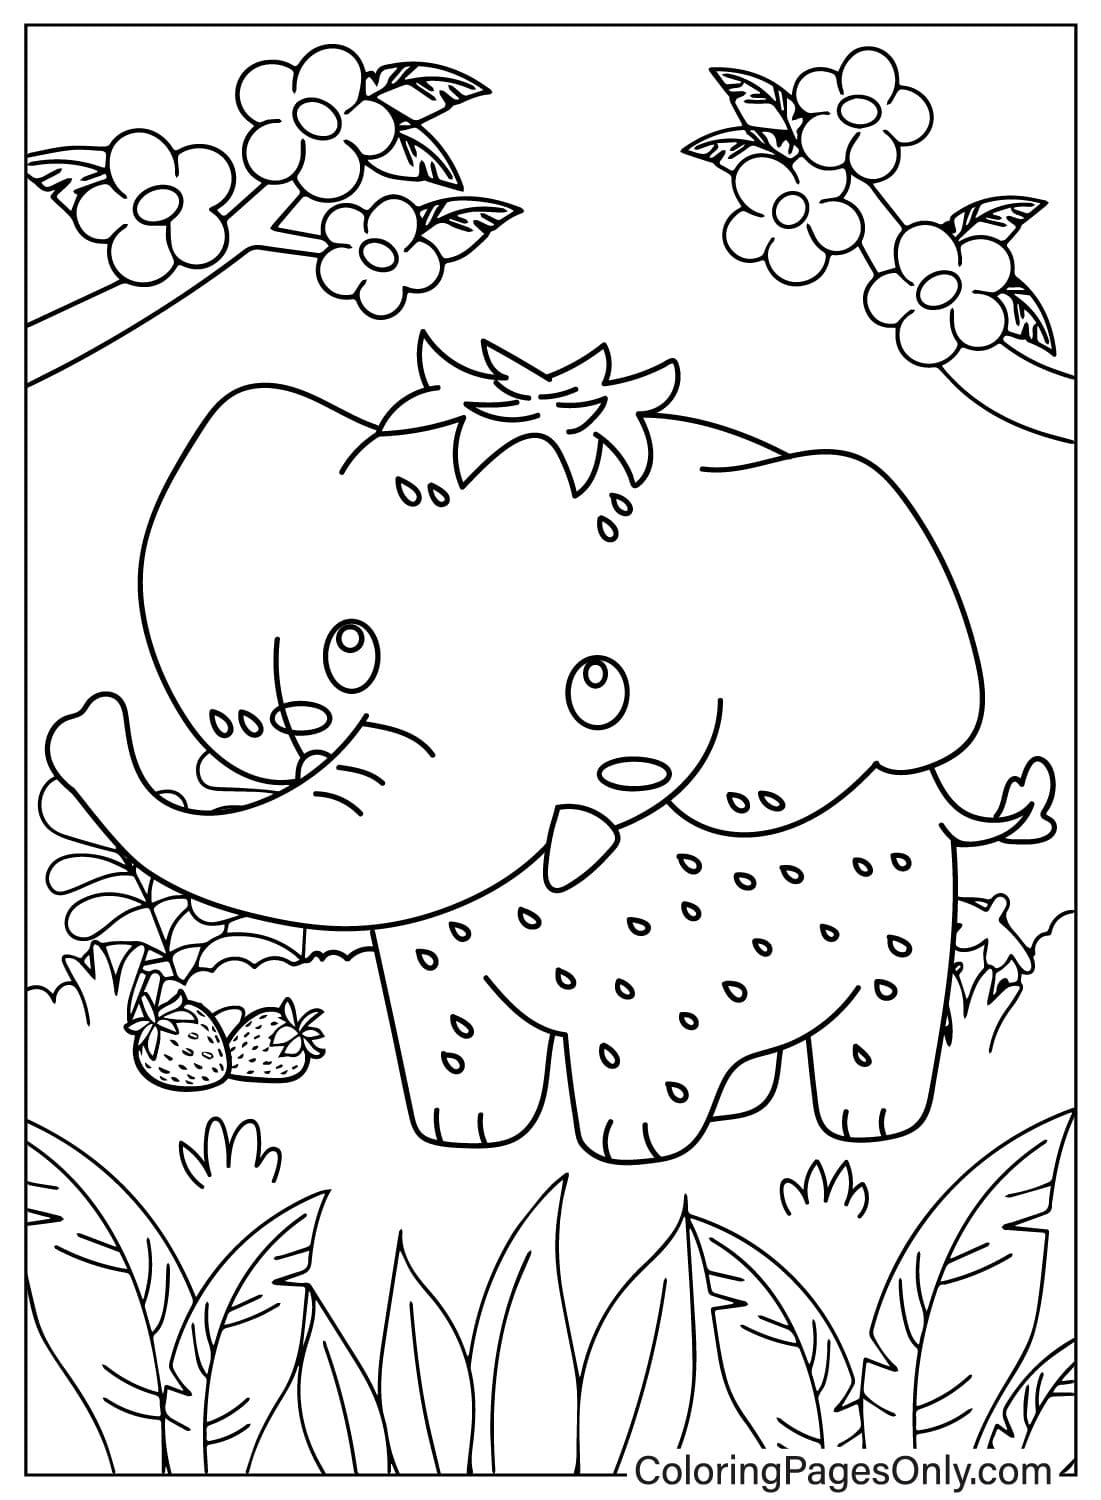 Elefante de fresa Página para colorear imprimir gratis de Elefante de fresa